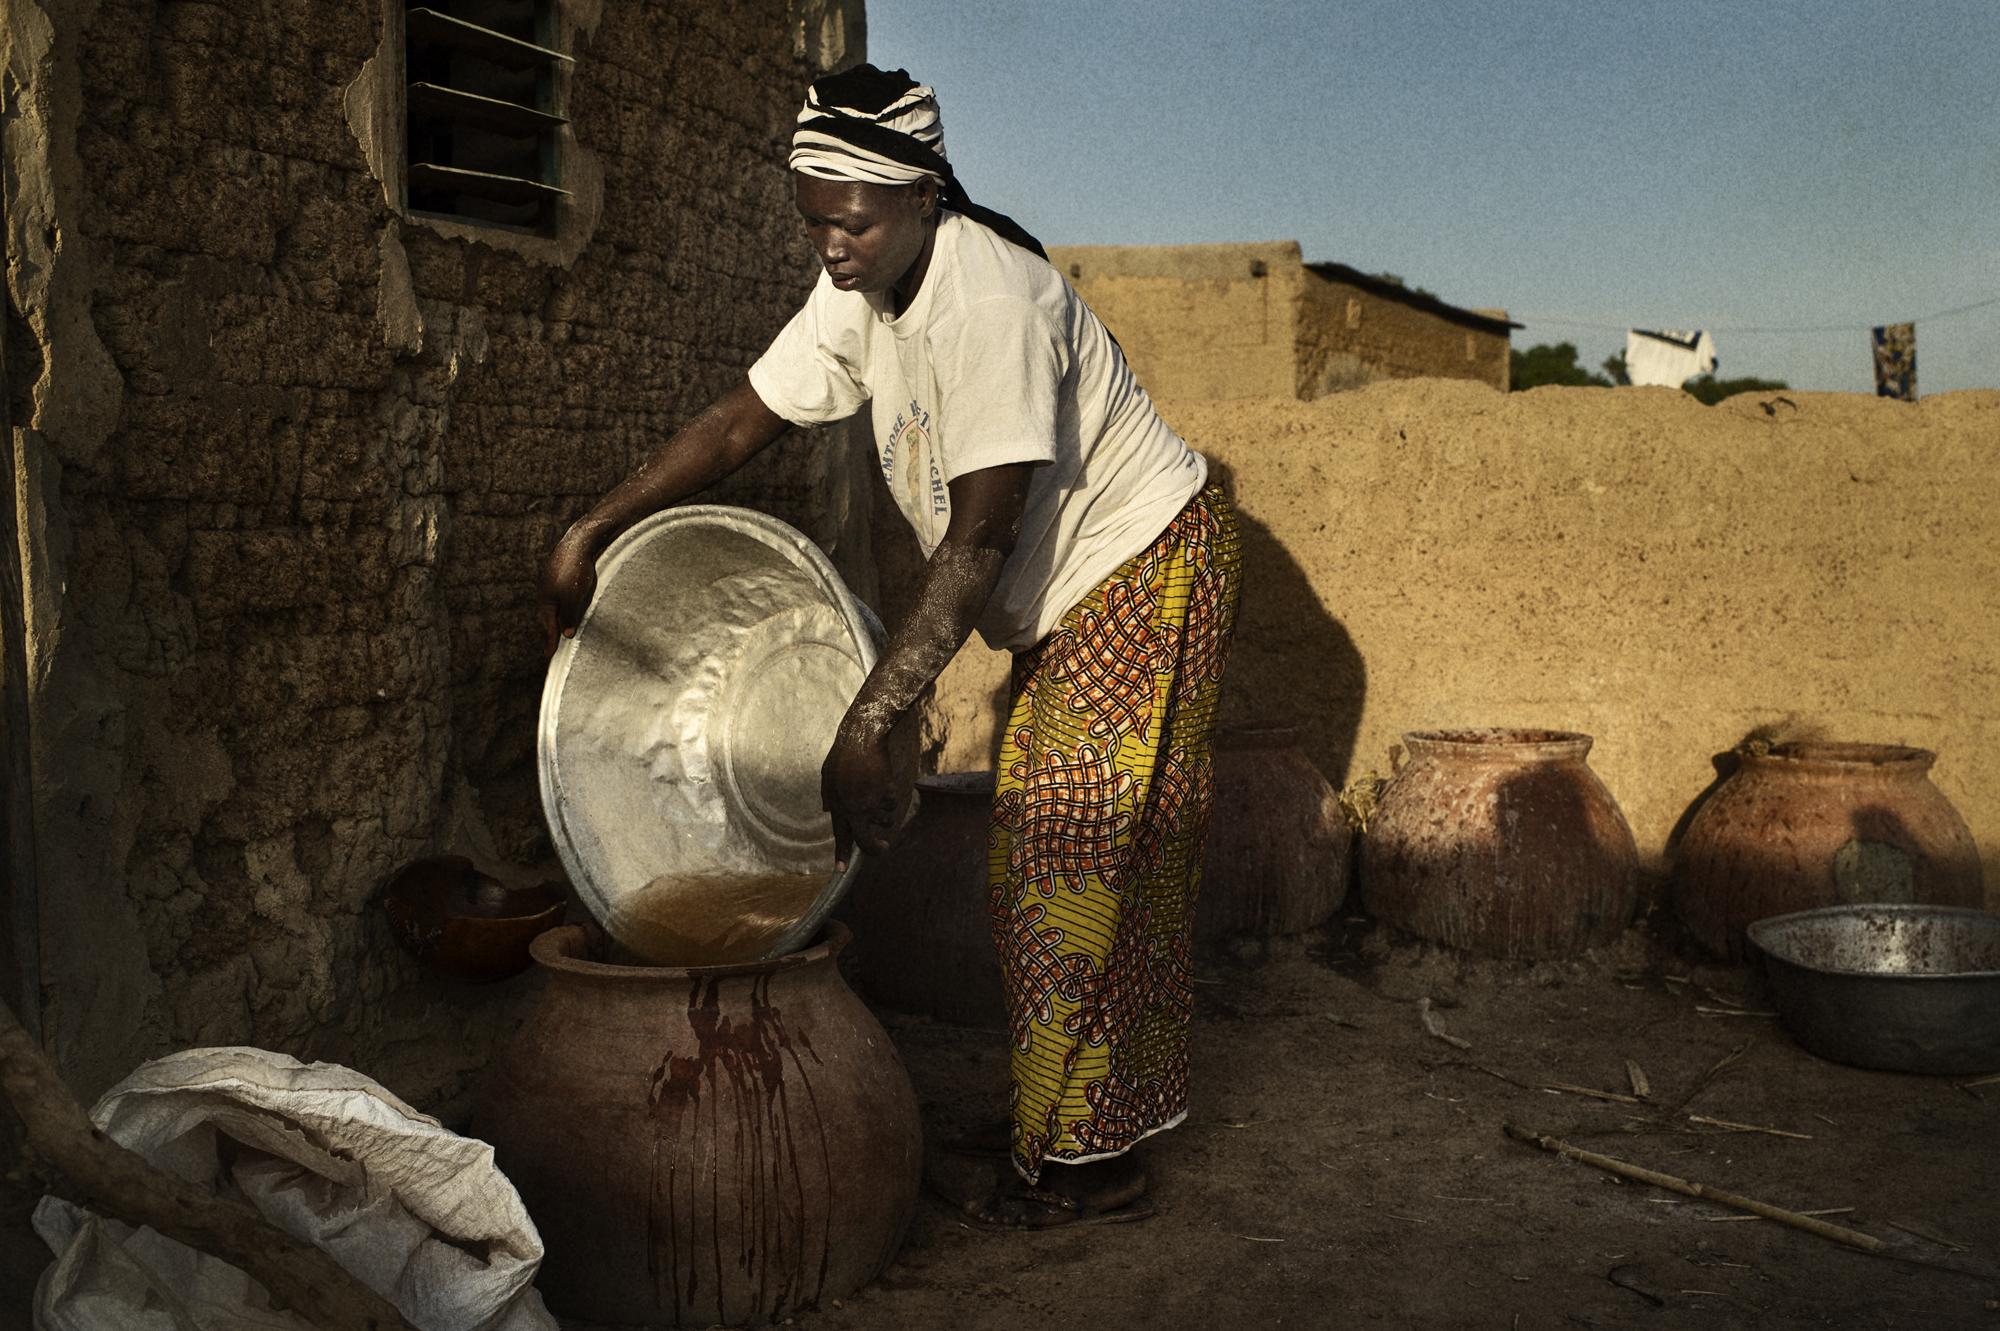 Microcredit / Burkina Faso - Burkina Faso, Pousg Ziga.
November 2011.
Reegma...